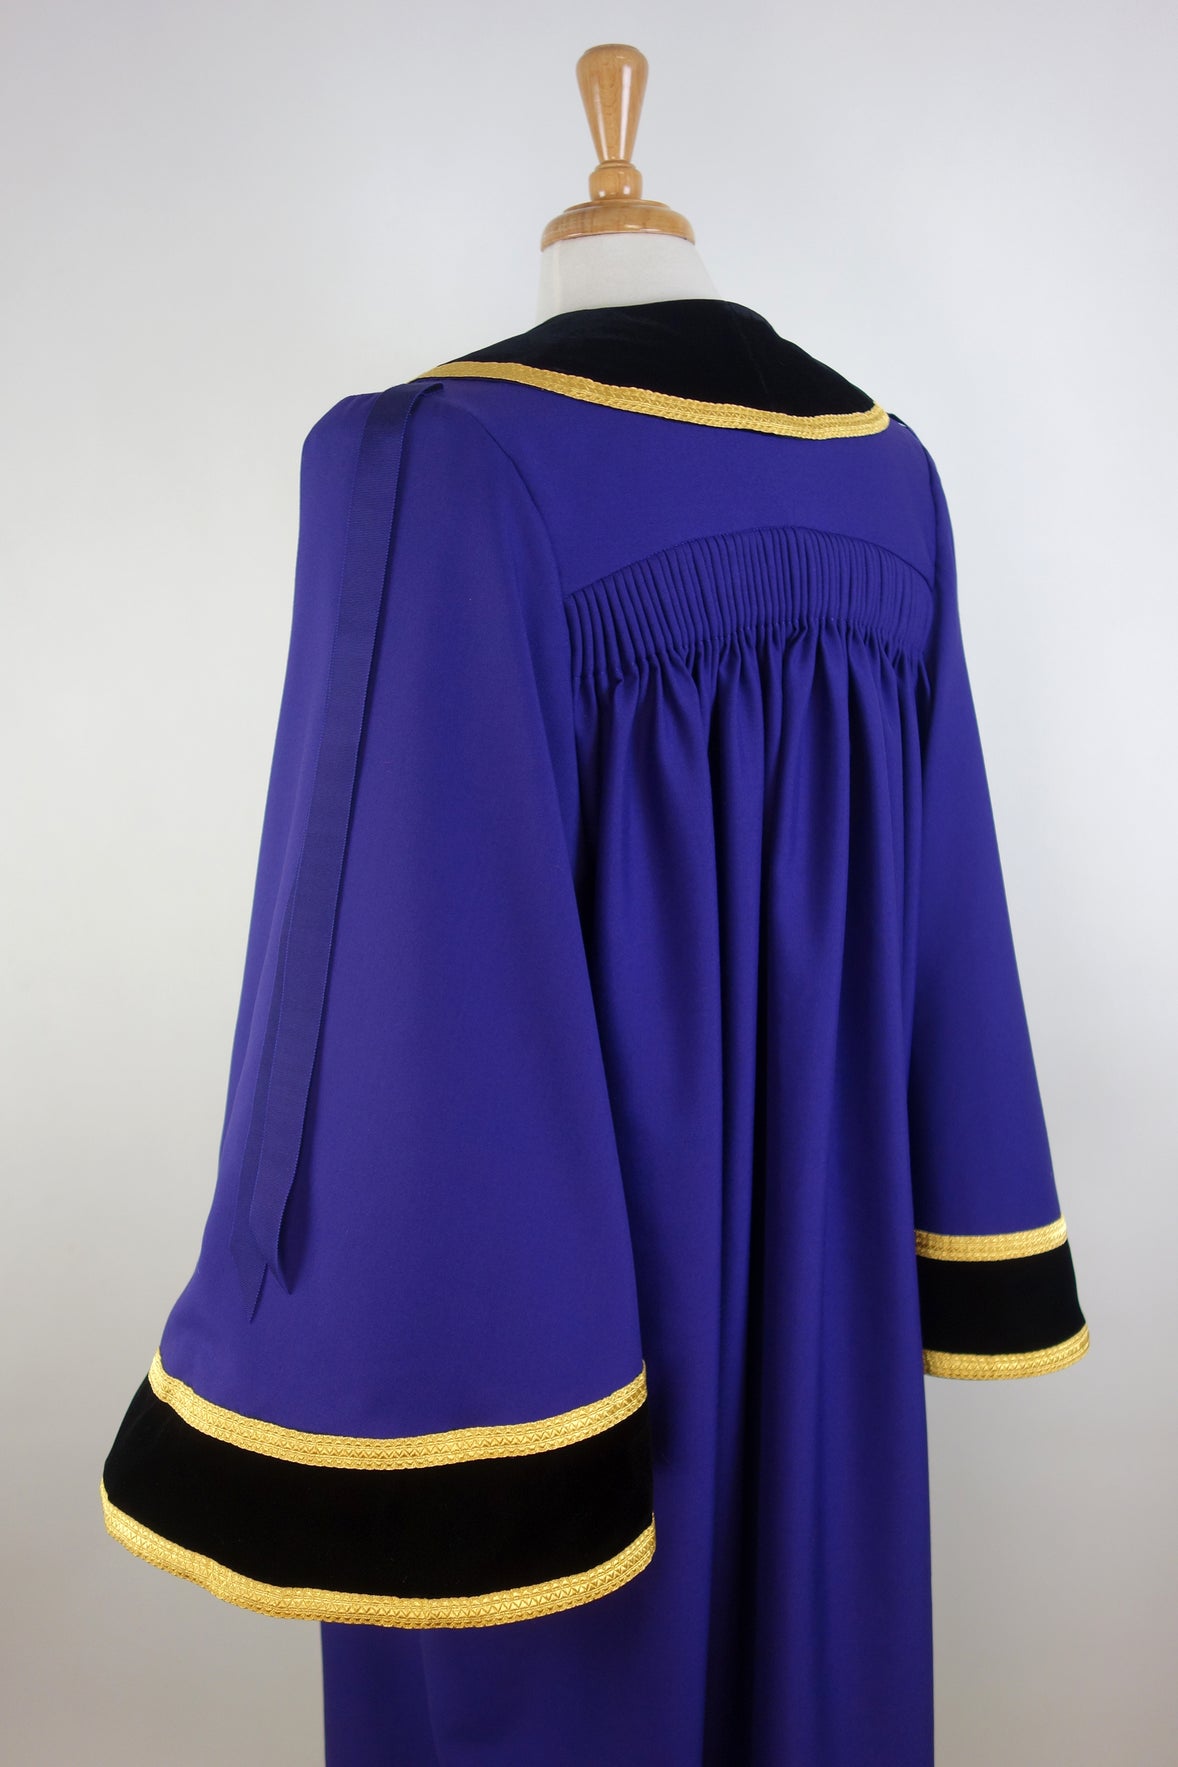 Velvet and Gold Mayoral Robe, Purple